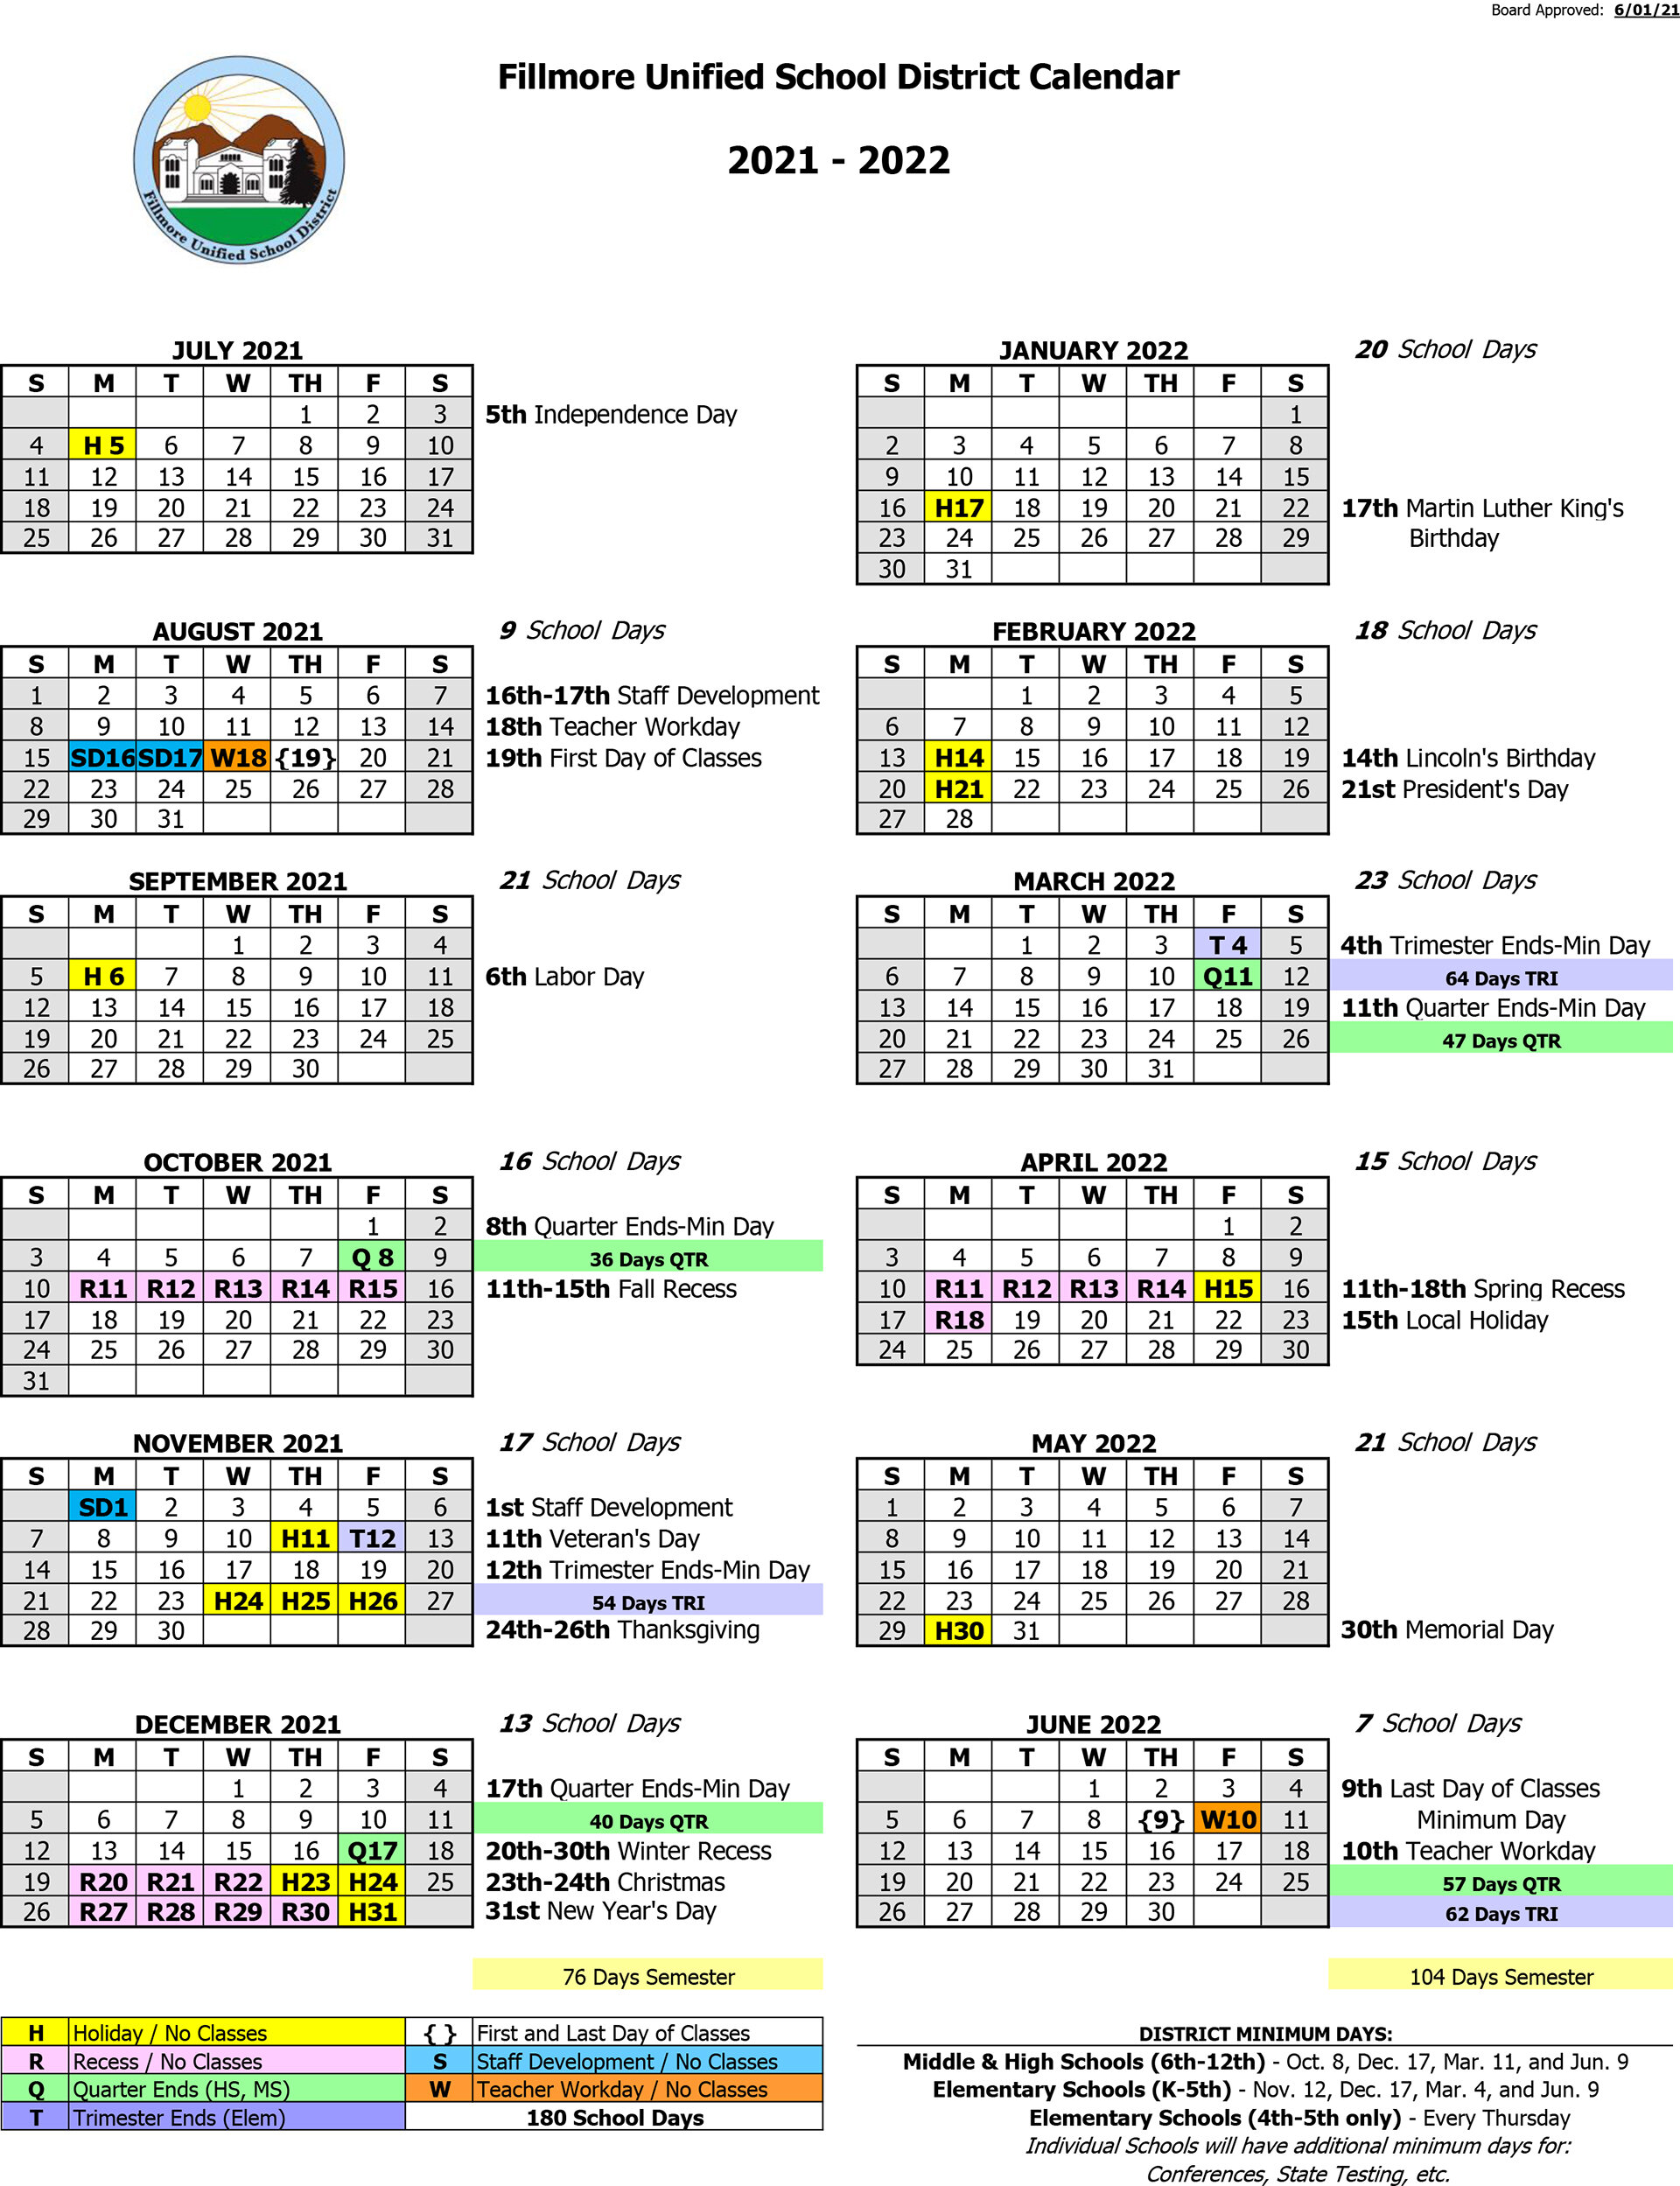 Fusd Calendar 2022 2023 2021-2022 School Calendar — Fillmore Unified School District